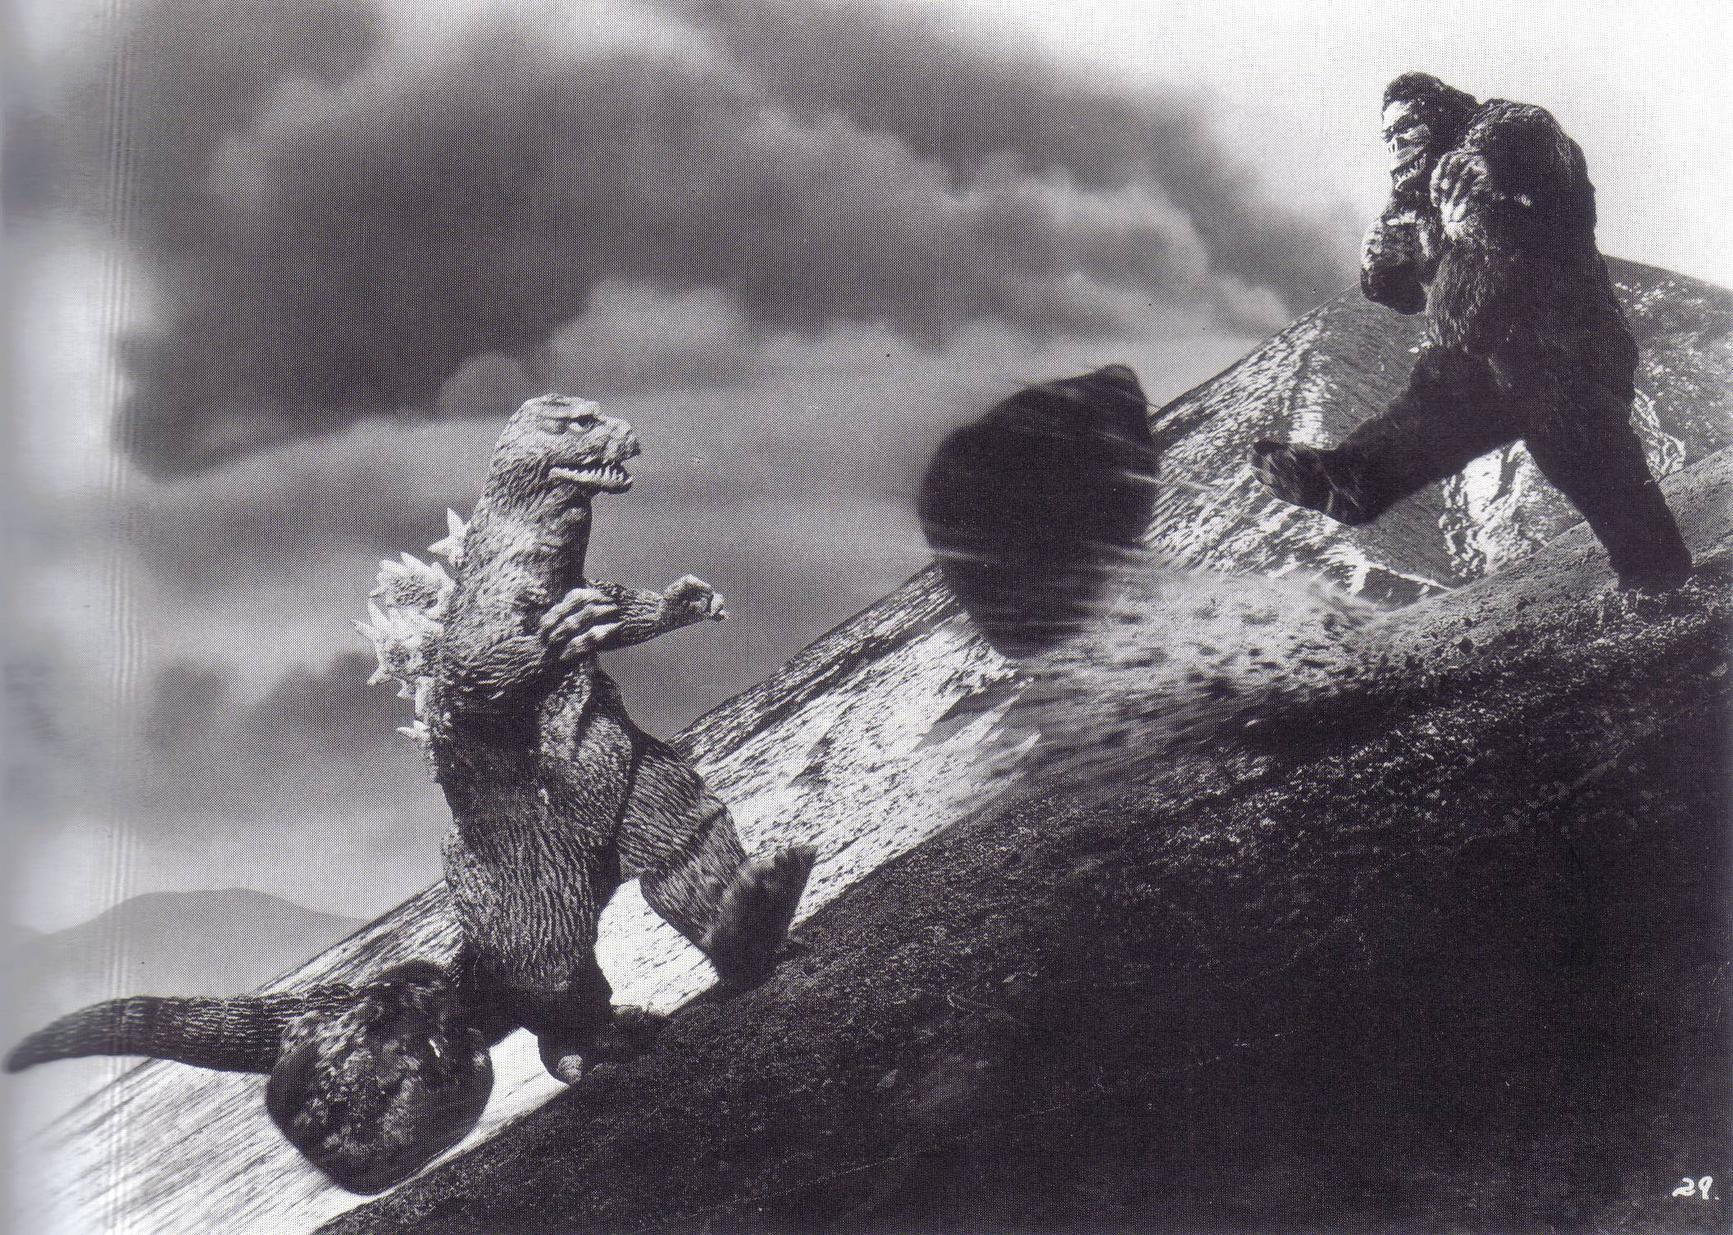 King Kong vs. Godzilla wallpaper